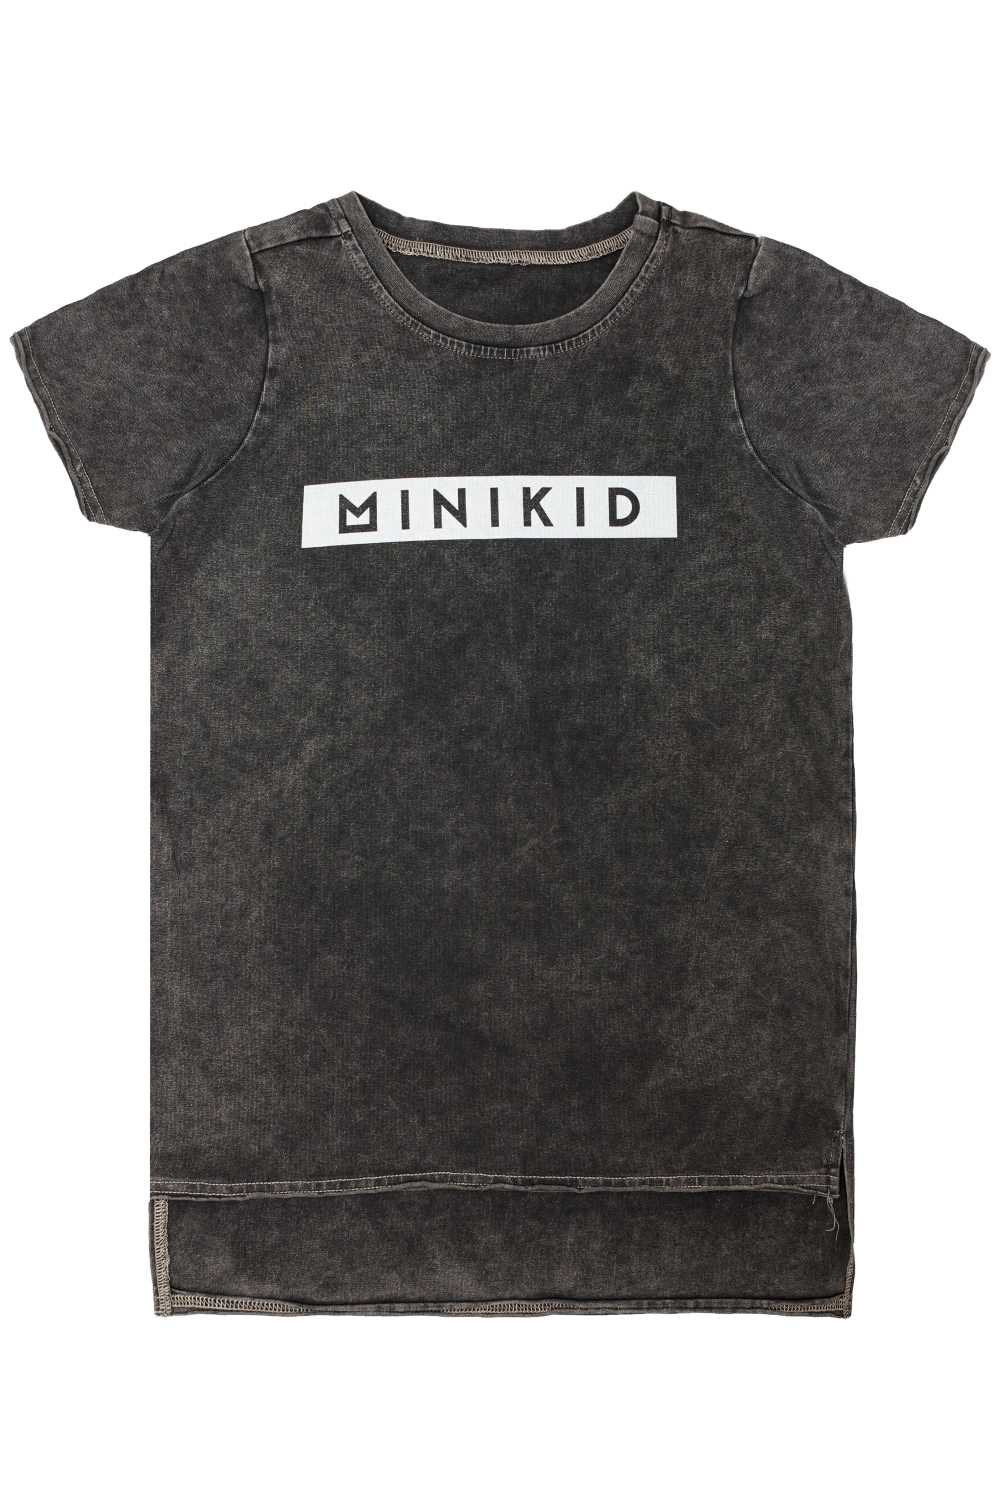 Minikid Unisex T-shirt του 007